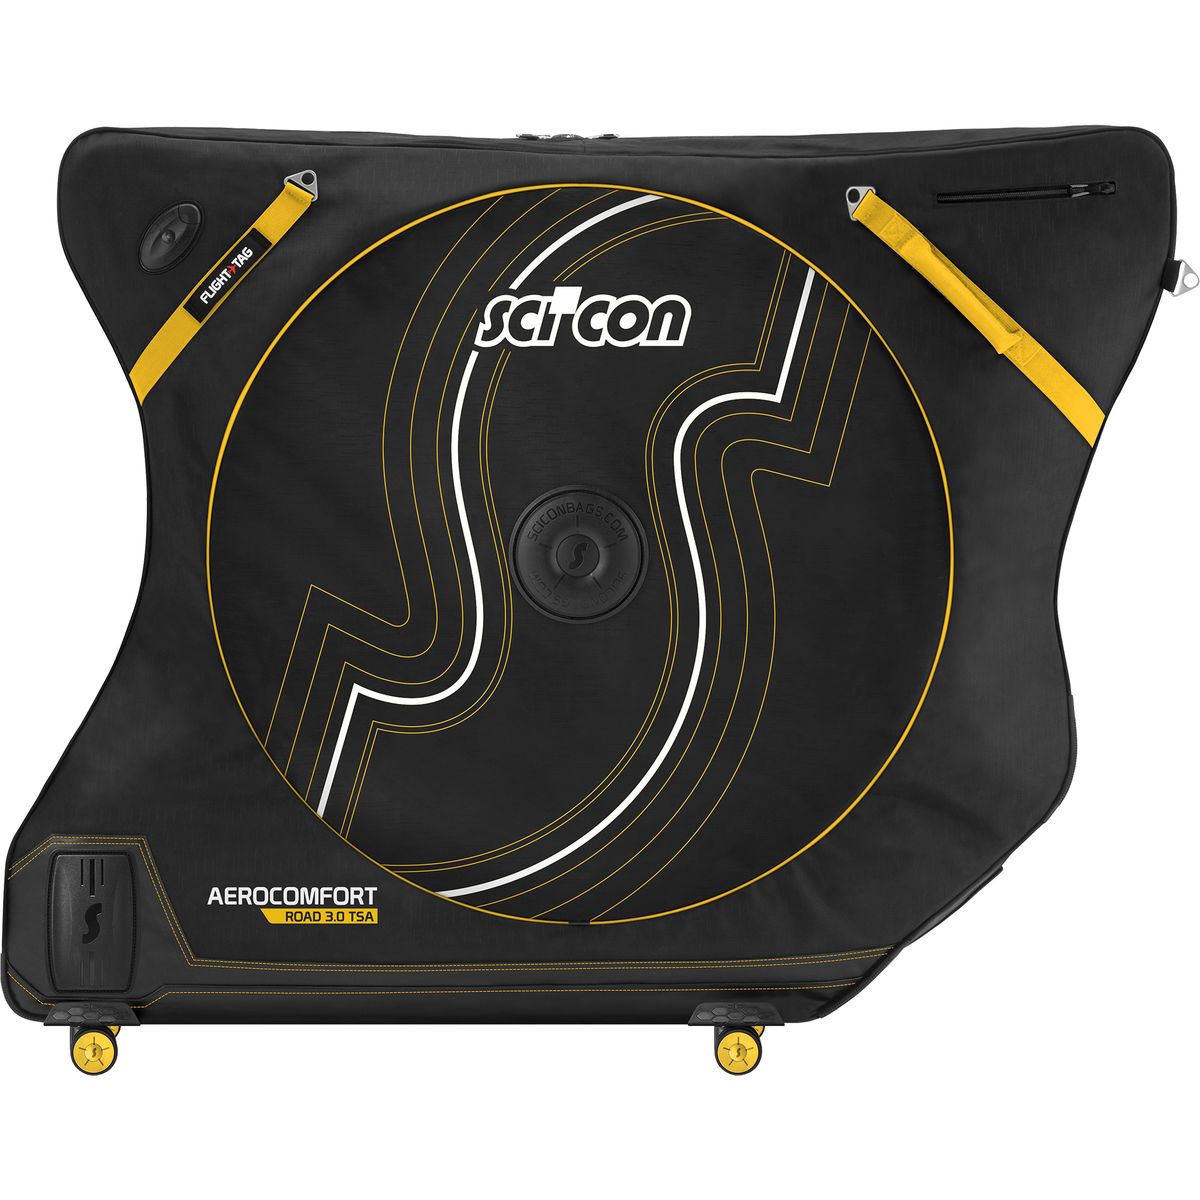 SciCon Limited Edition Aerocomfort 3.0 TSA Road Case